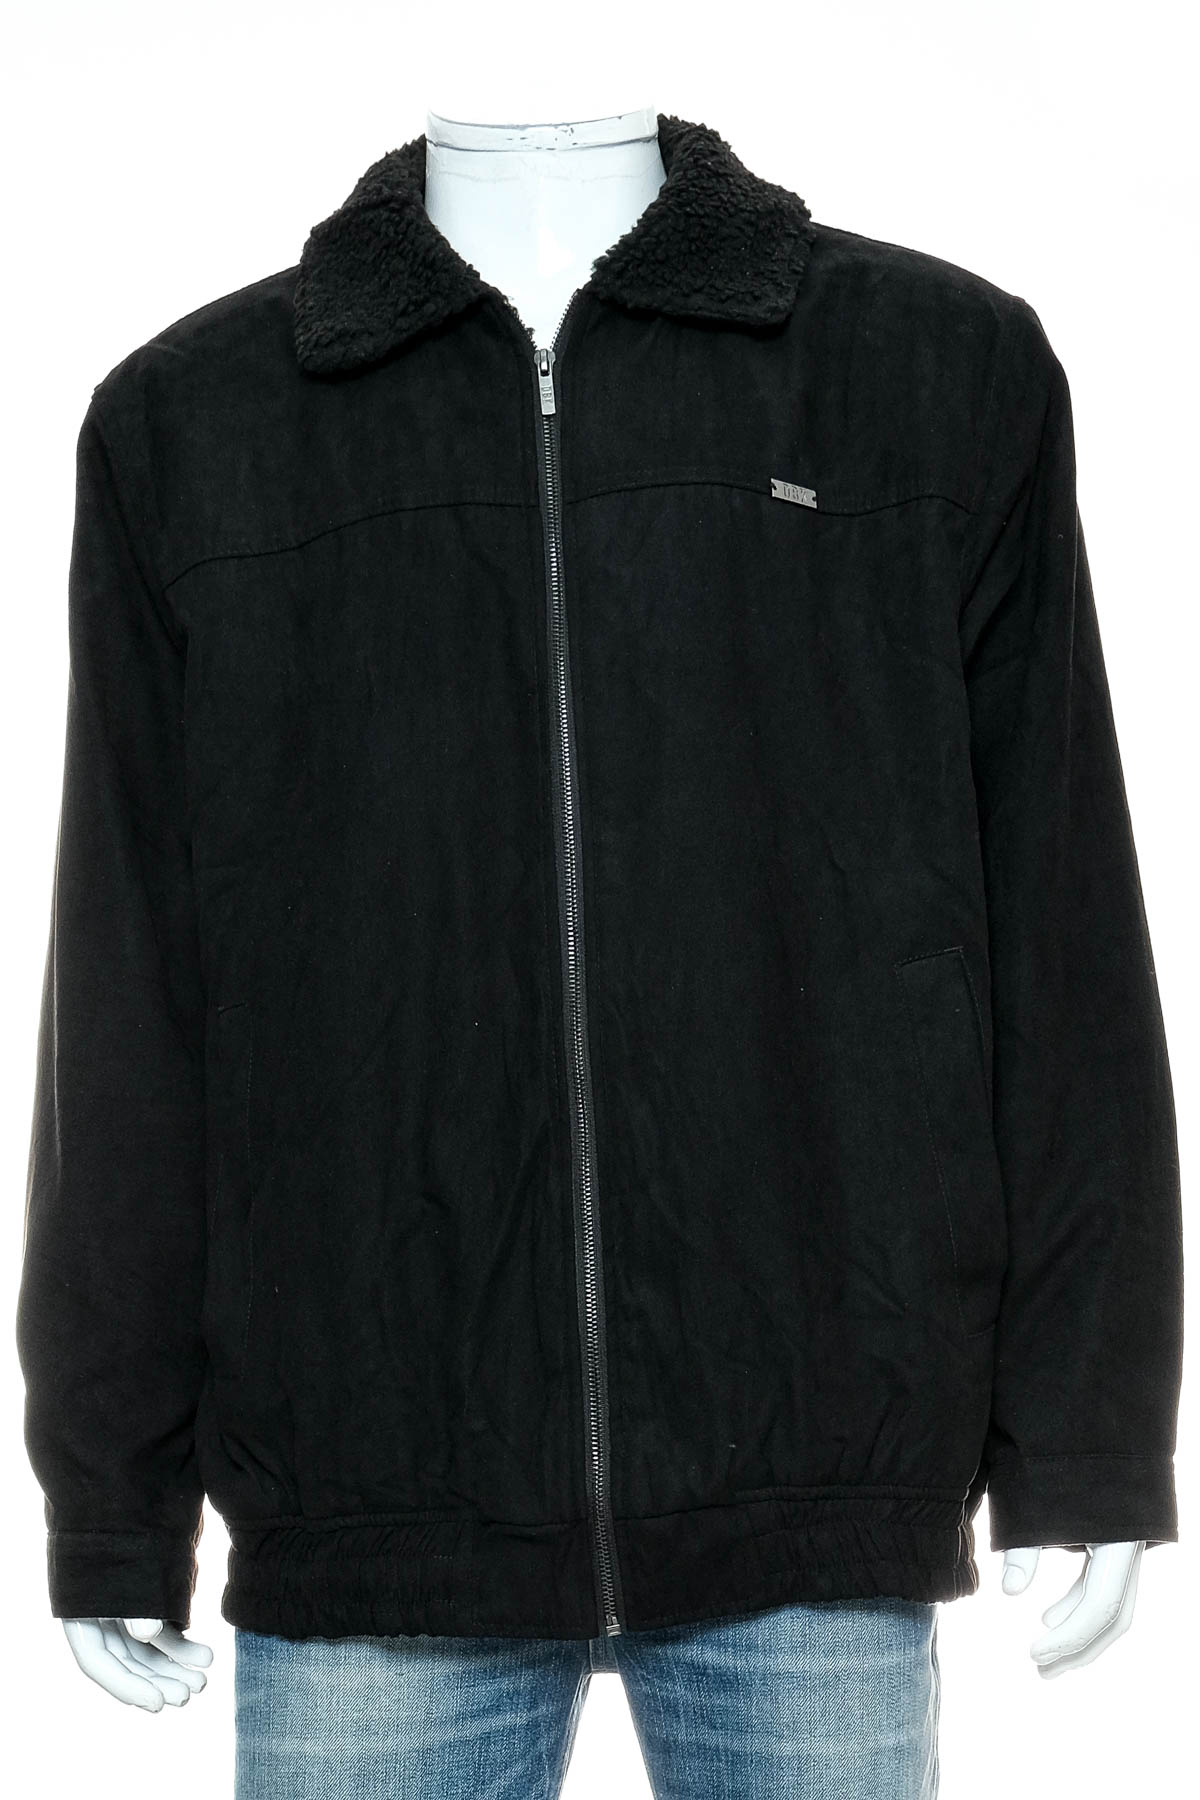 Men's jacket - DBK - 0